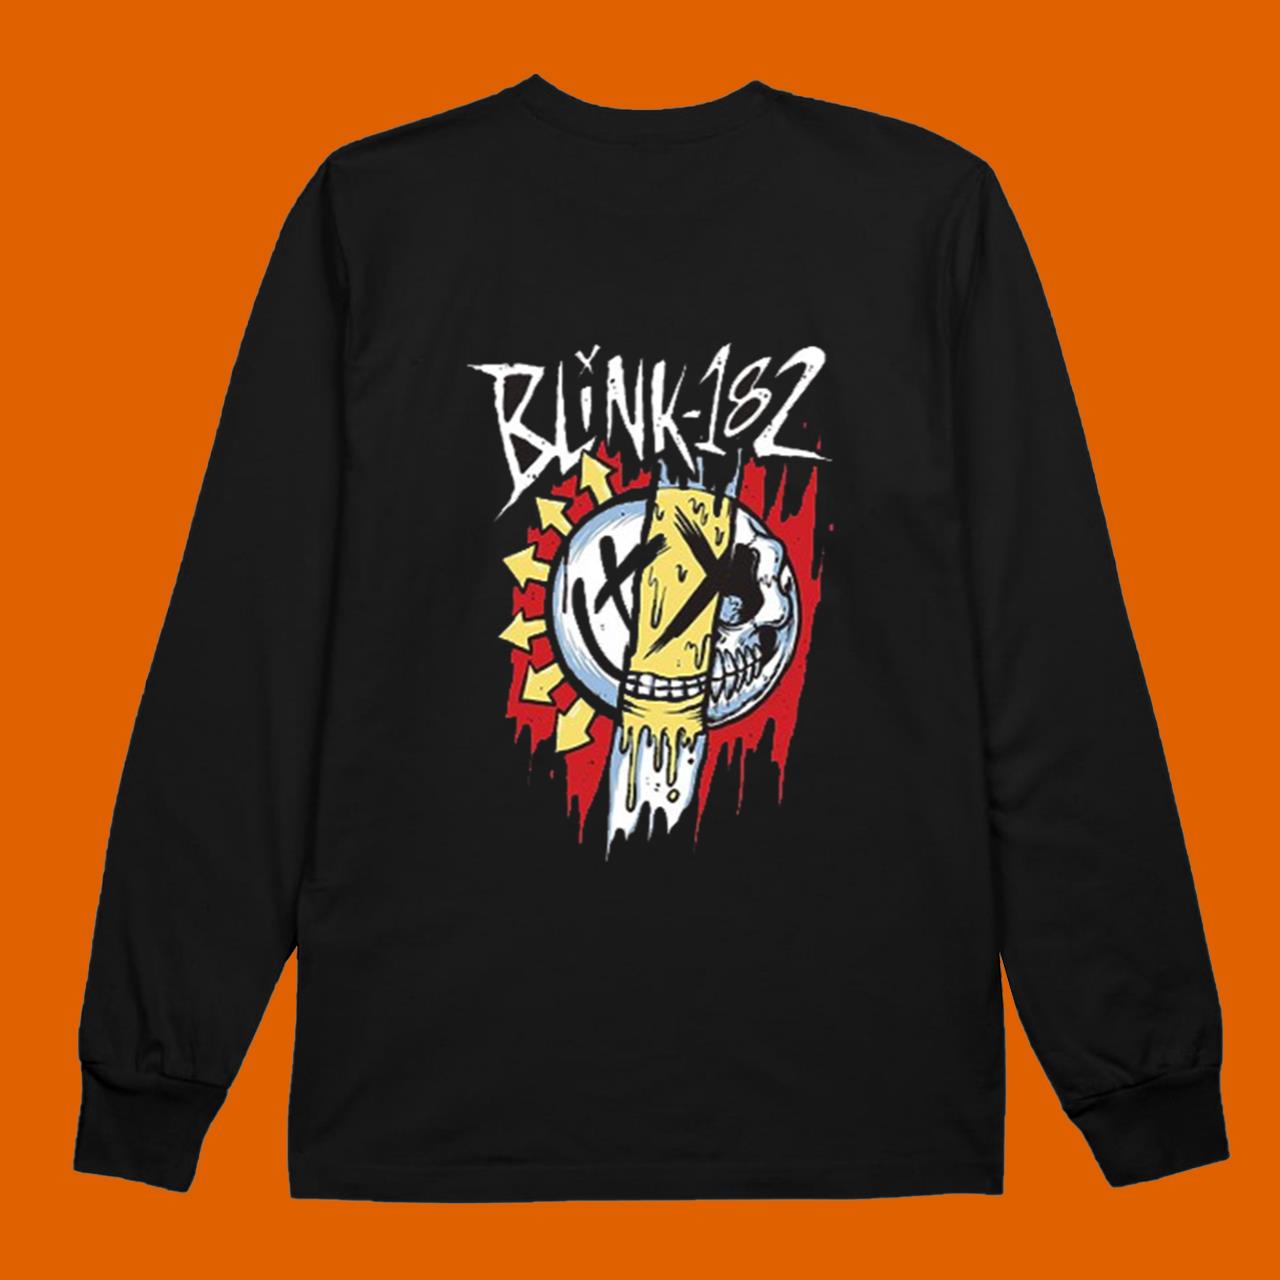 Retro Band Blink 182 Shirt